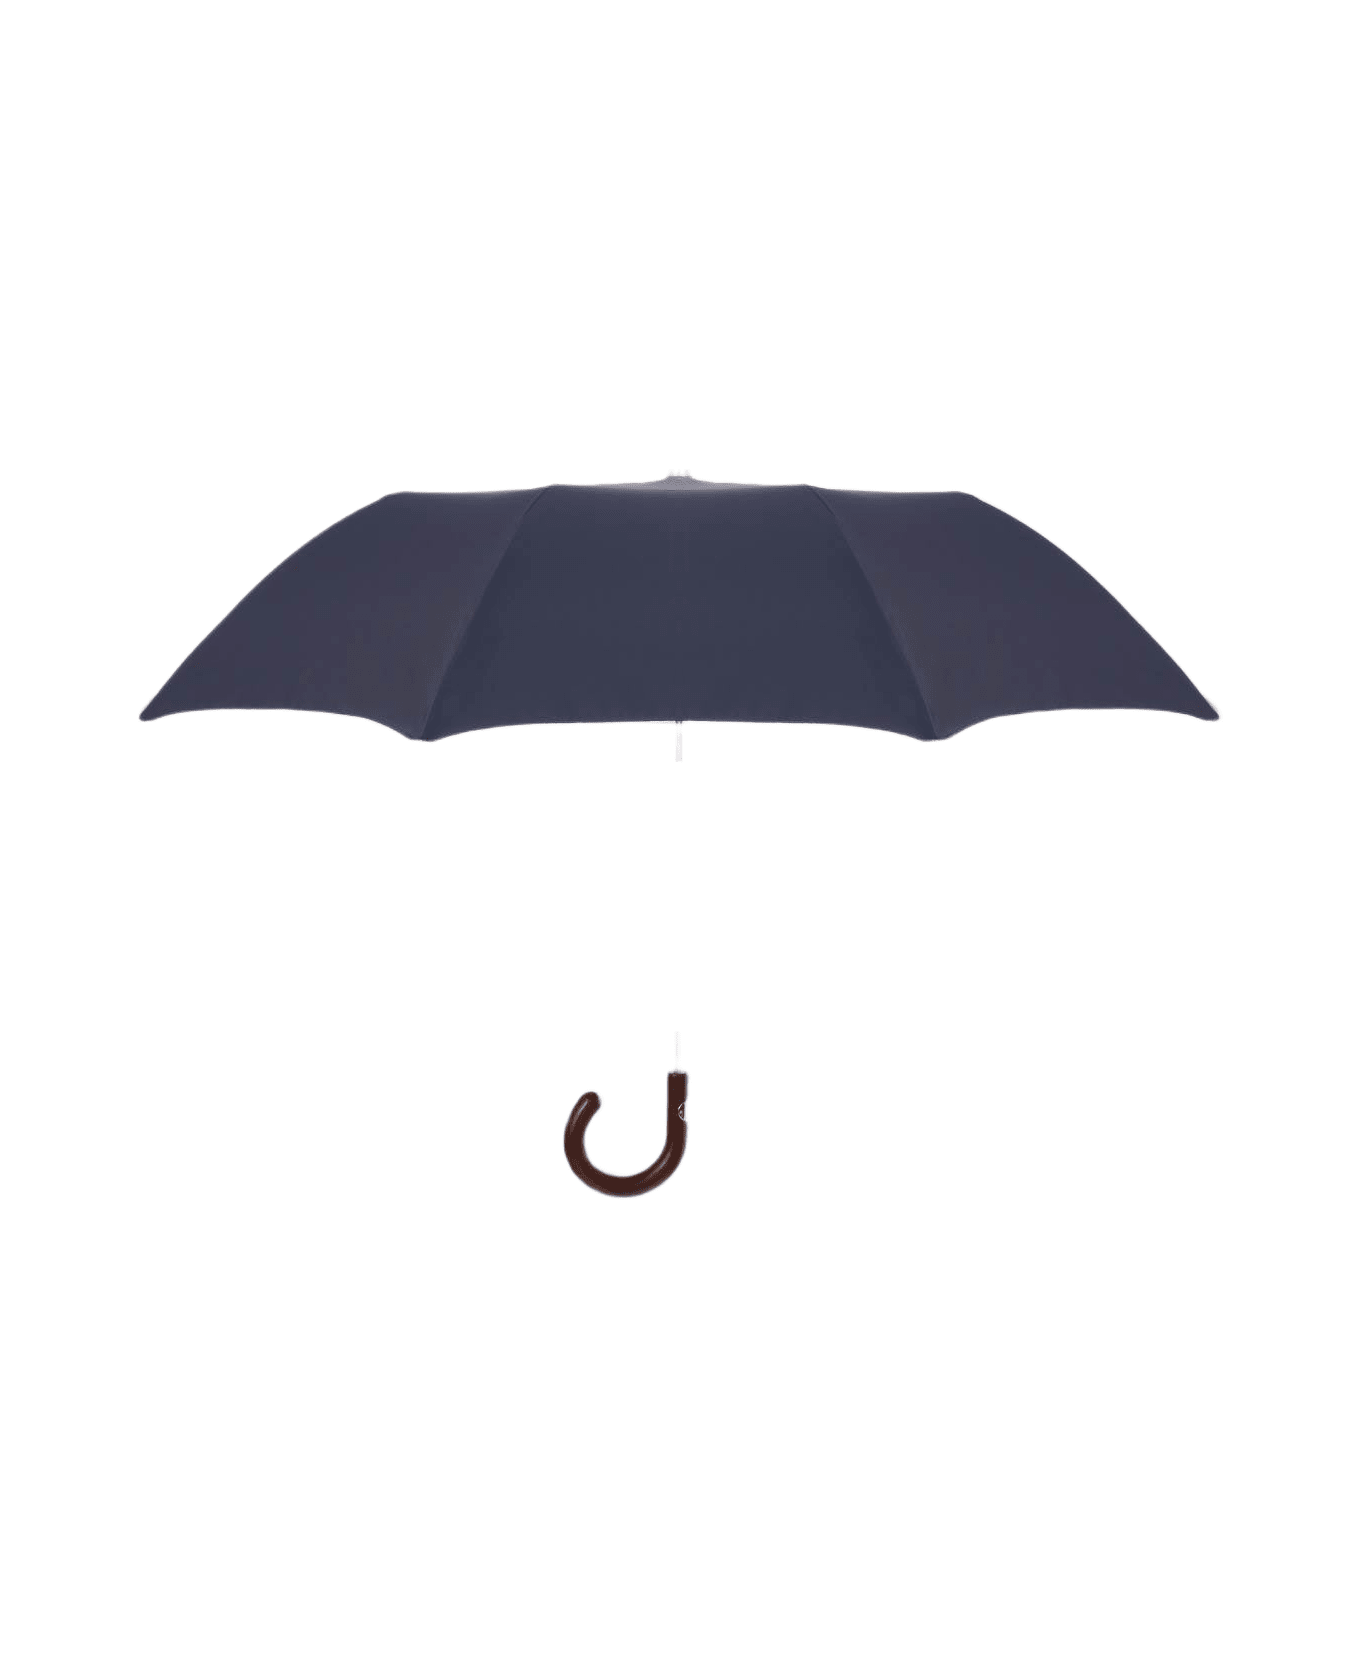 Larusmiani Folding Umbrella Umbrella - Navy 傘